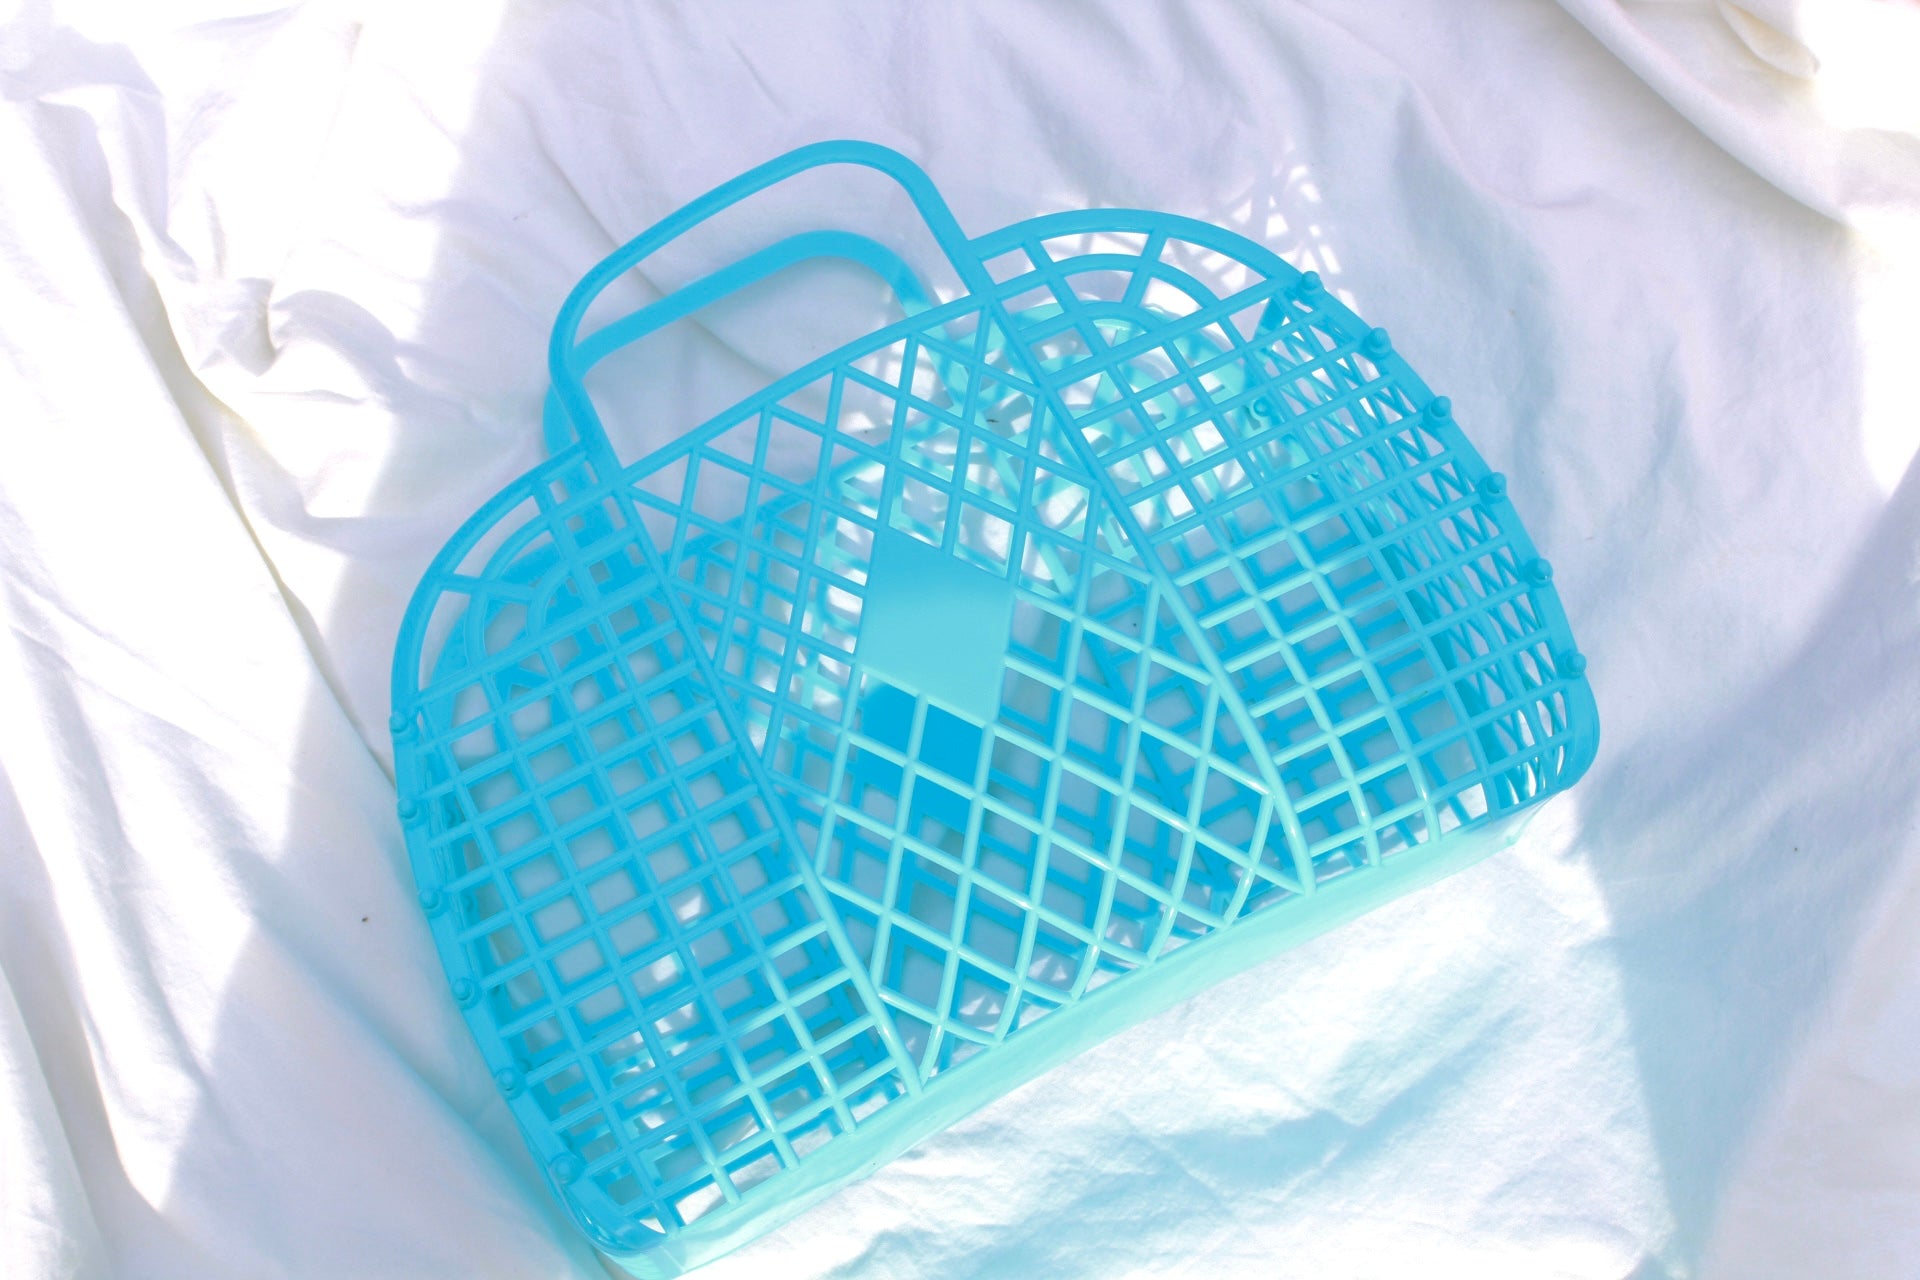 Jelly Basket Large - Blue